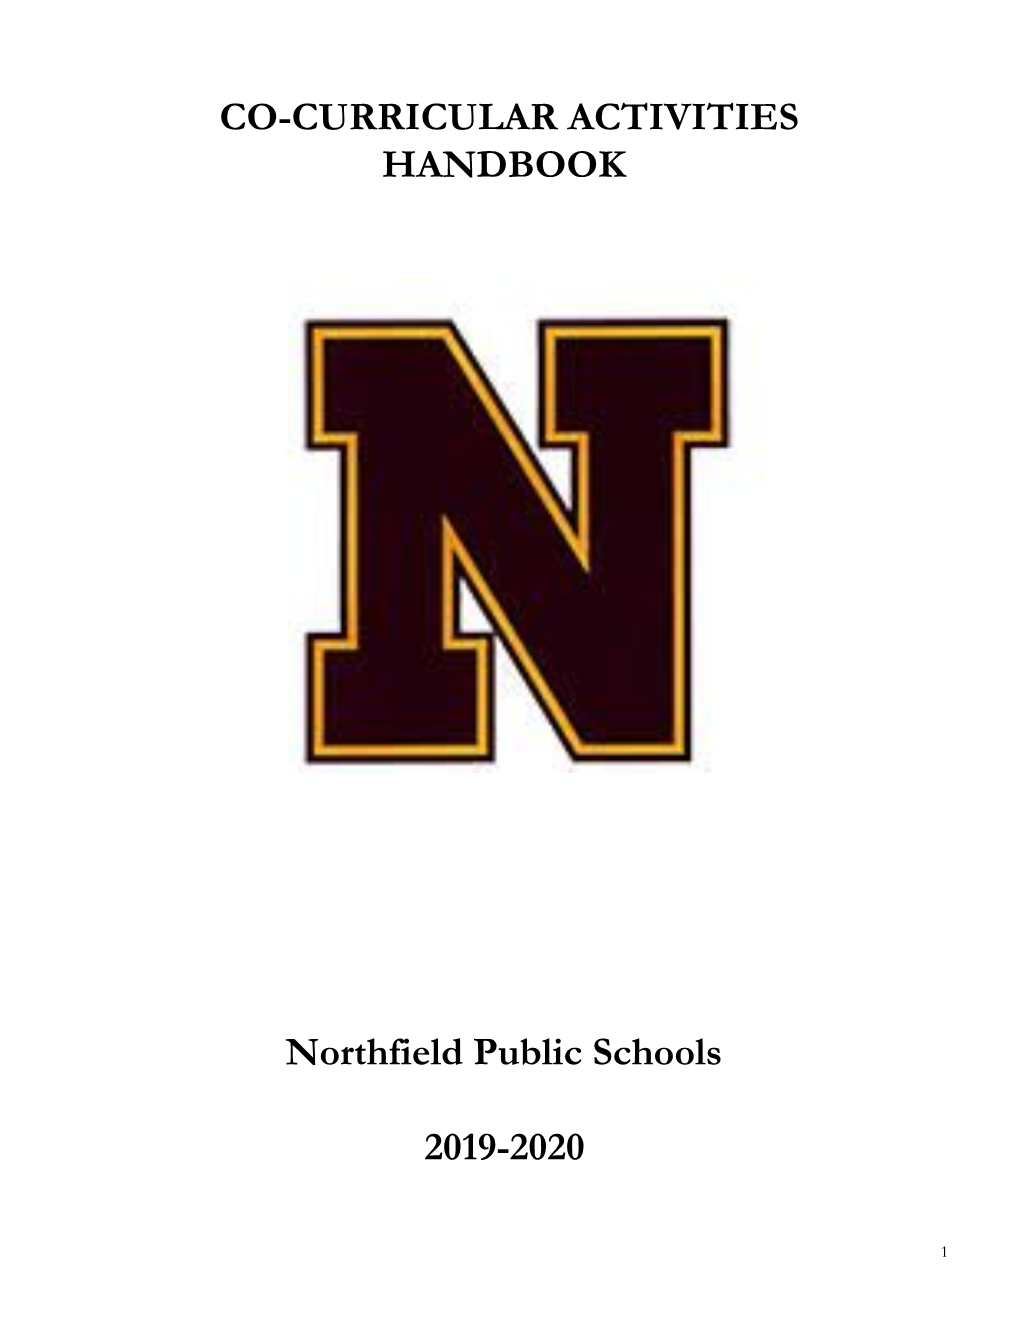 Co-Curricular Activities Handbook